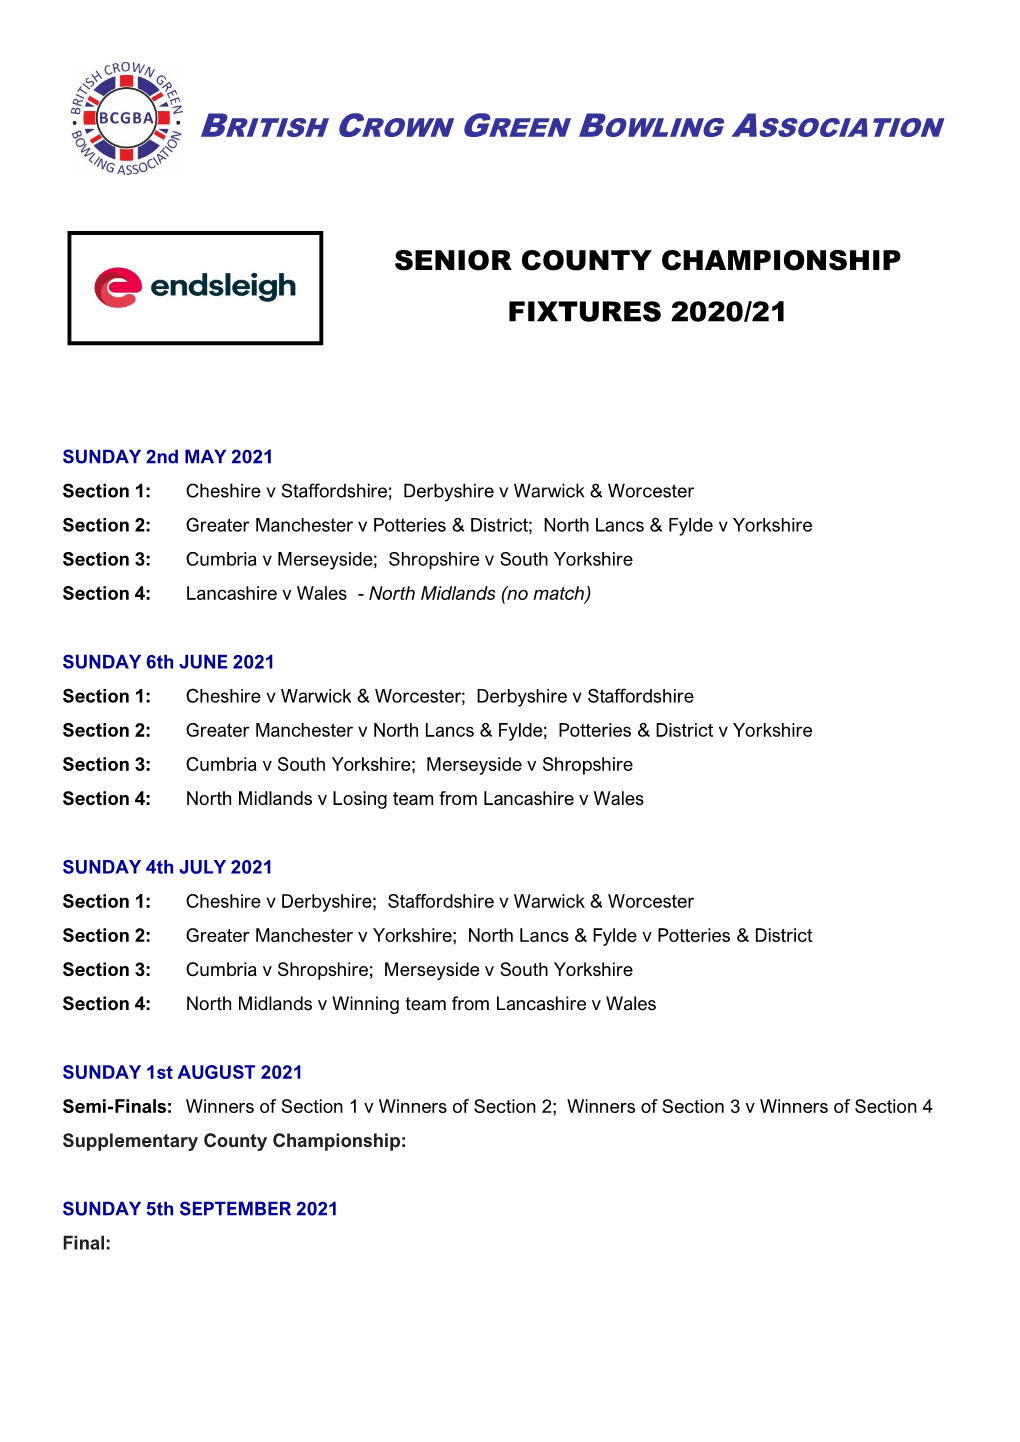 BCGBA 2020/21 Senior County Championship Fixtures